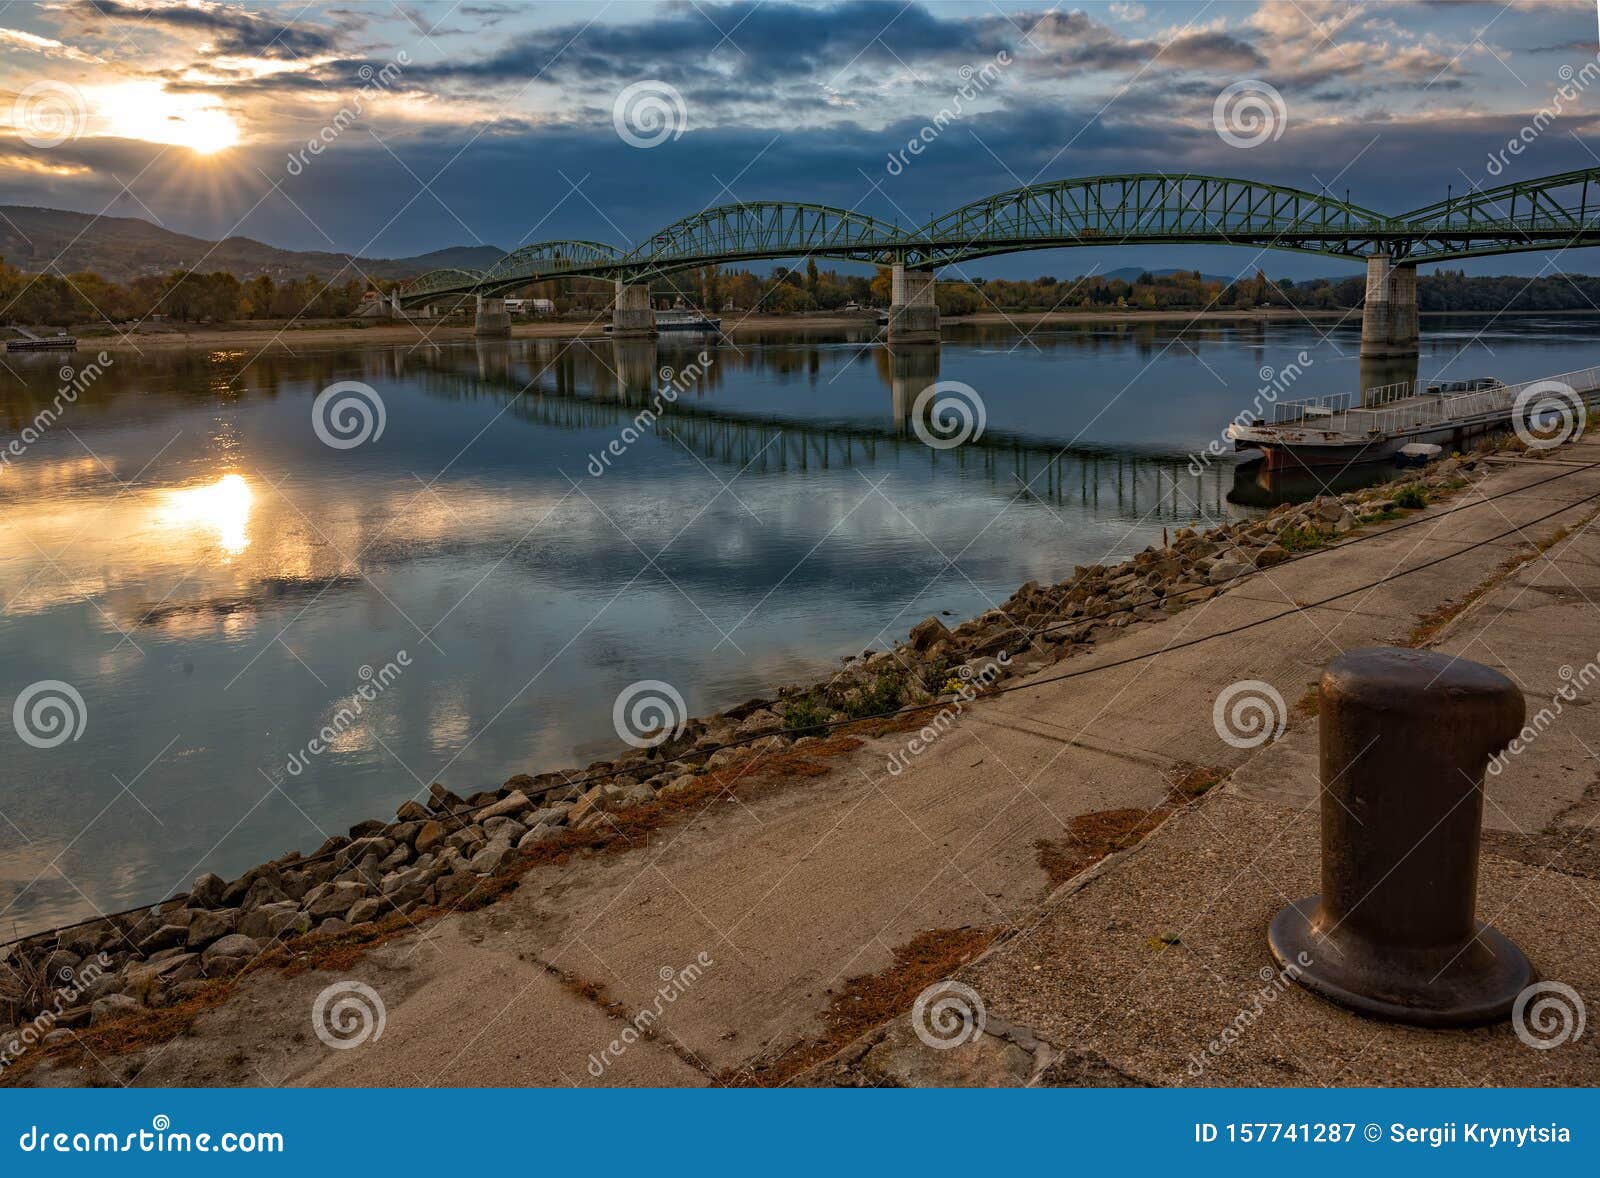 scenic view of maria valeria bridge with reflection in danube river, esztergom, hungary at sunrise